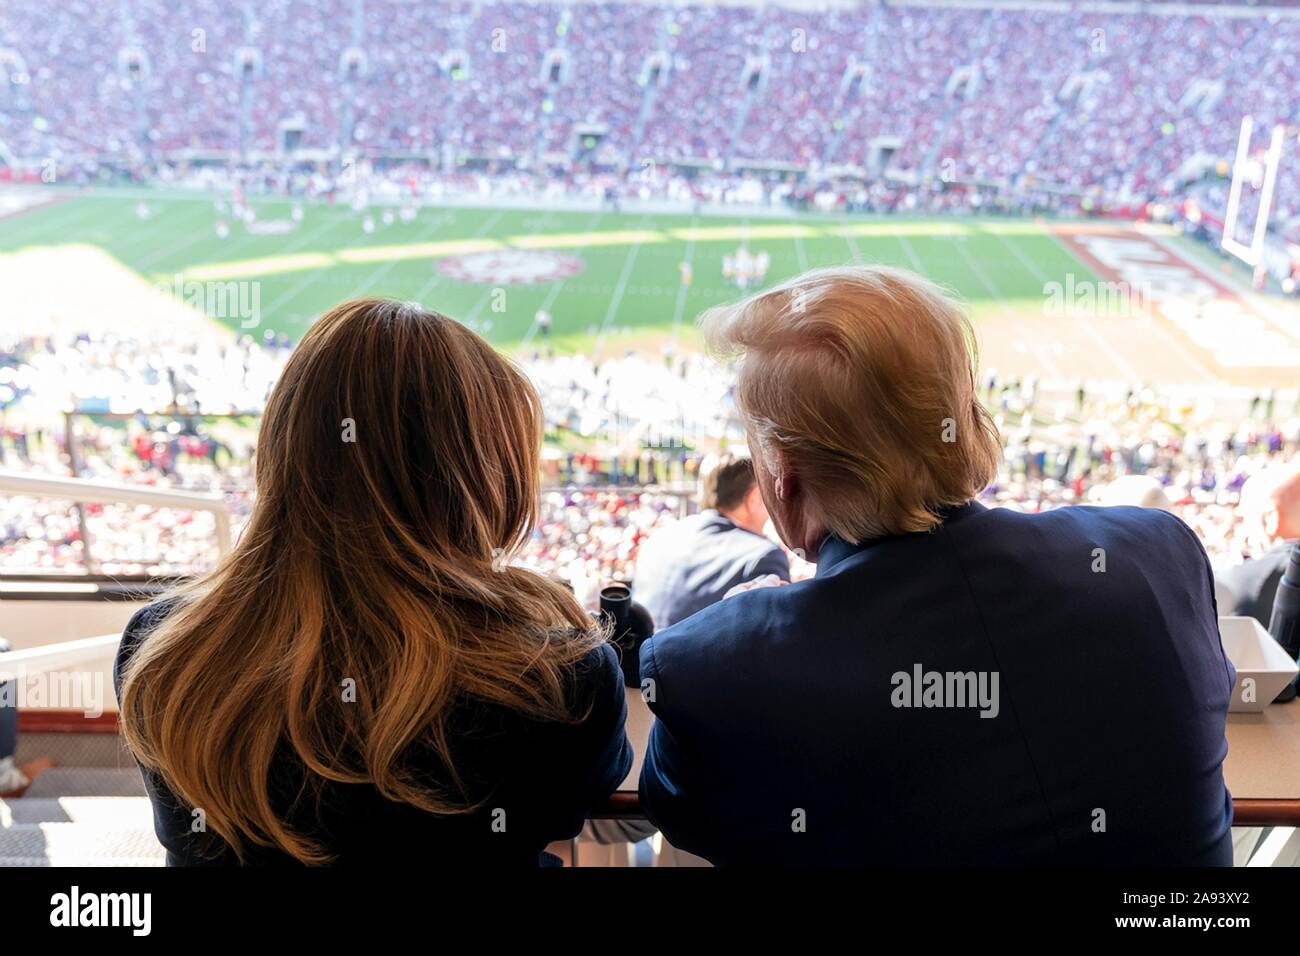 U.S President Donald Trump and First Lady Melania Trump watch the University of Alabama vs Louisiana State University football game at Bryant-Denny Stadium November 9, 2019 in Tuscaloosa, Alabama. Stock Photo